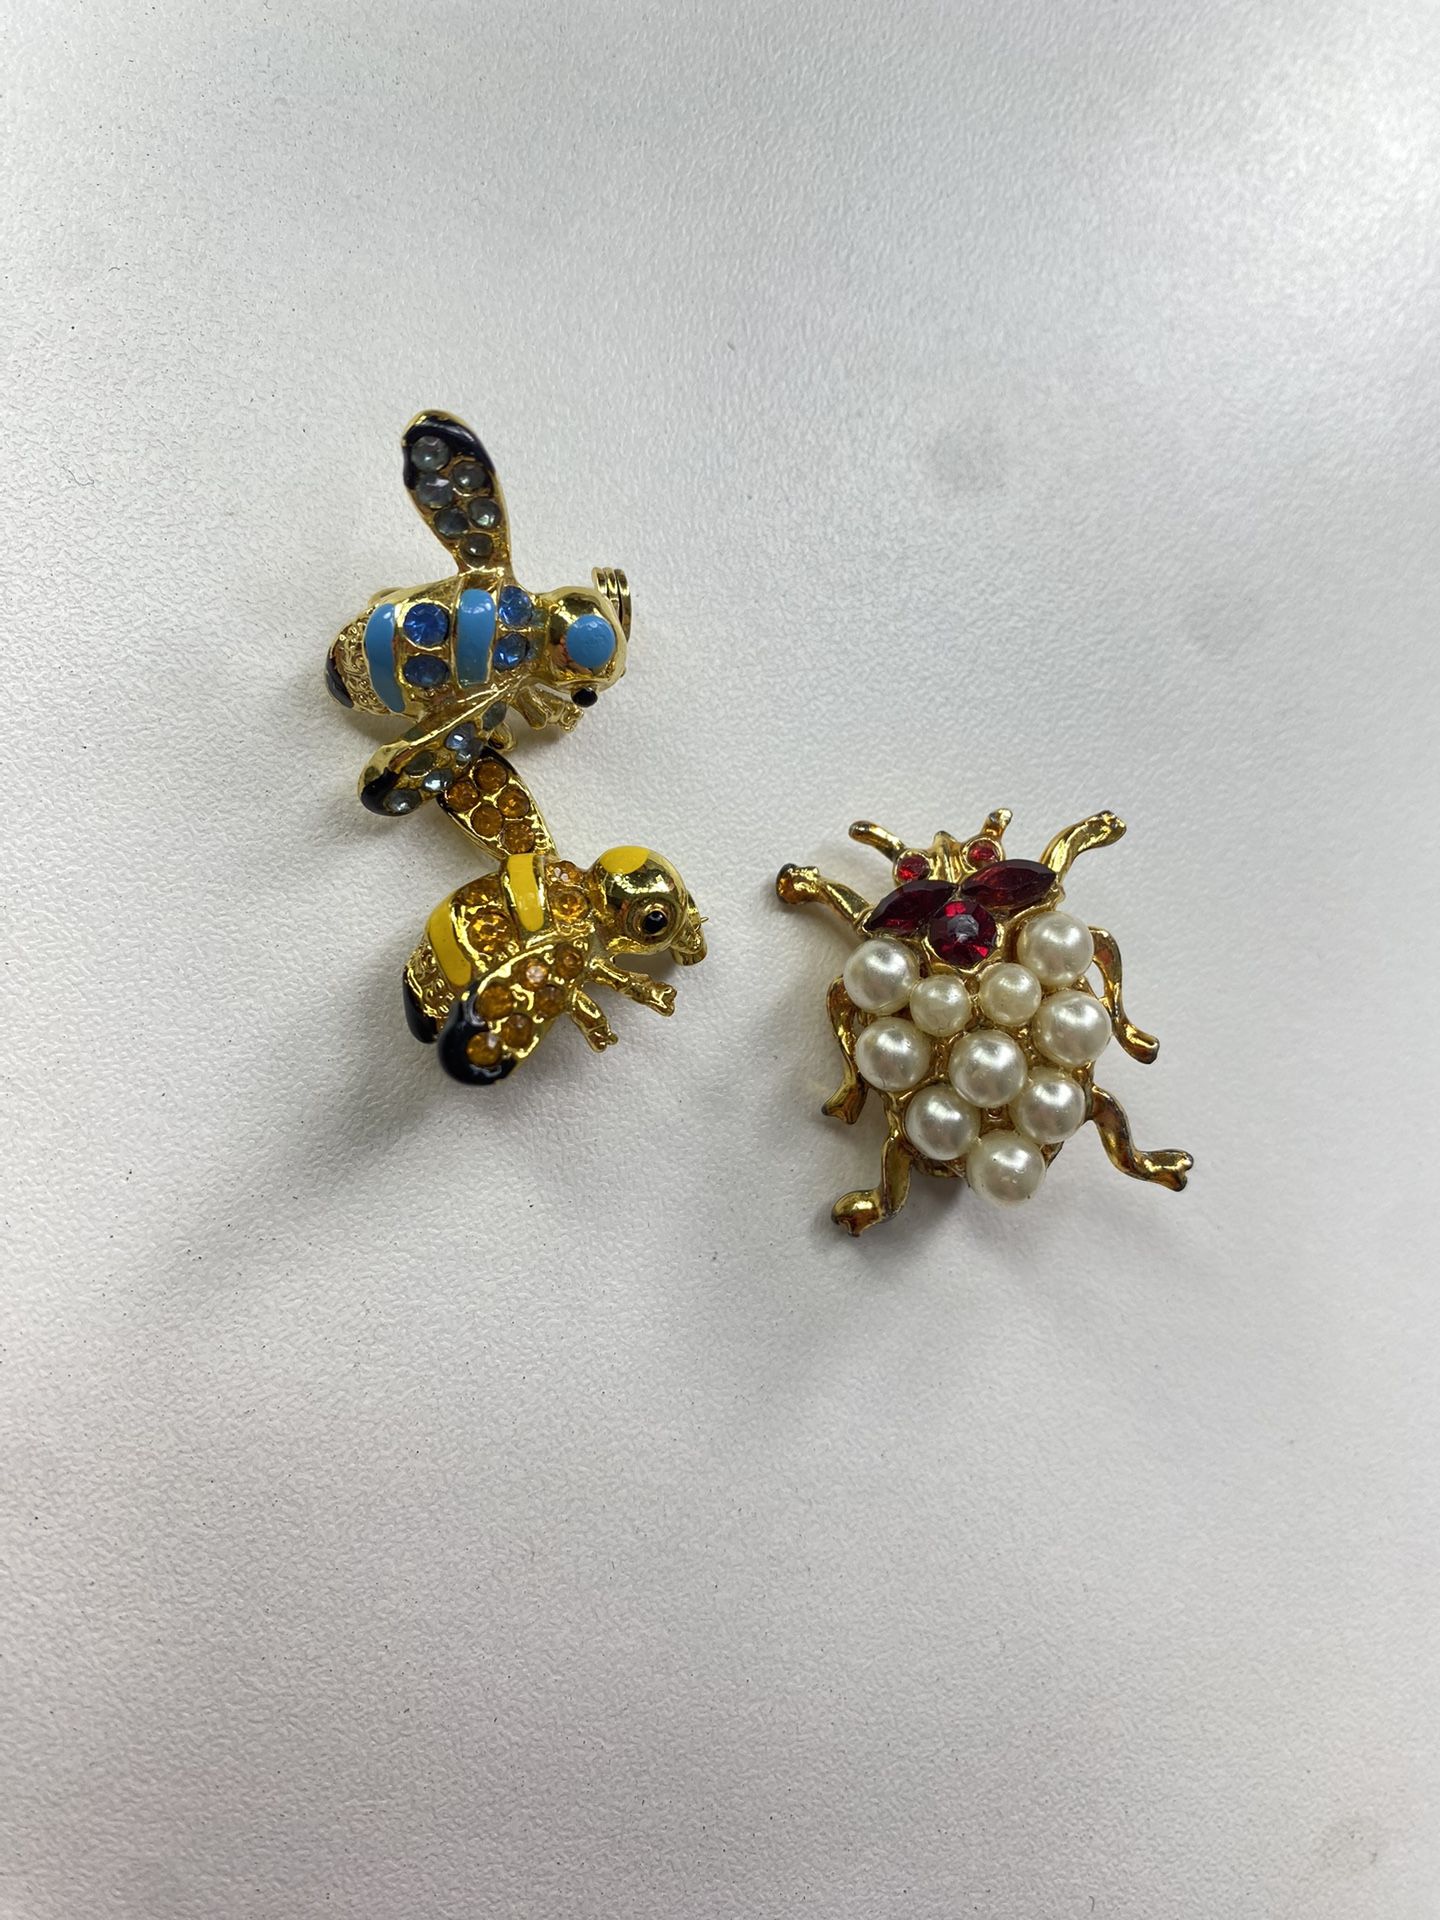 Vintage bugs brooch’s pins Beetle . Bumblebees . accessories . jewelry